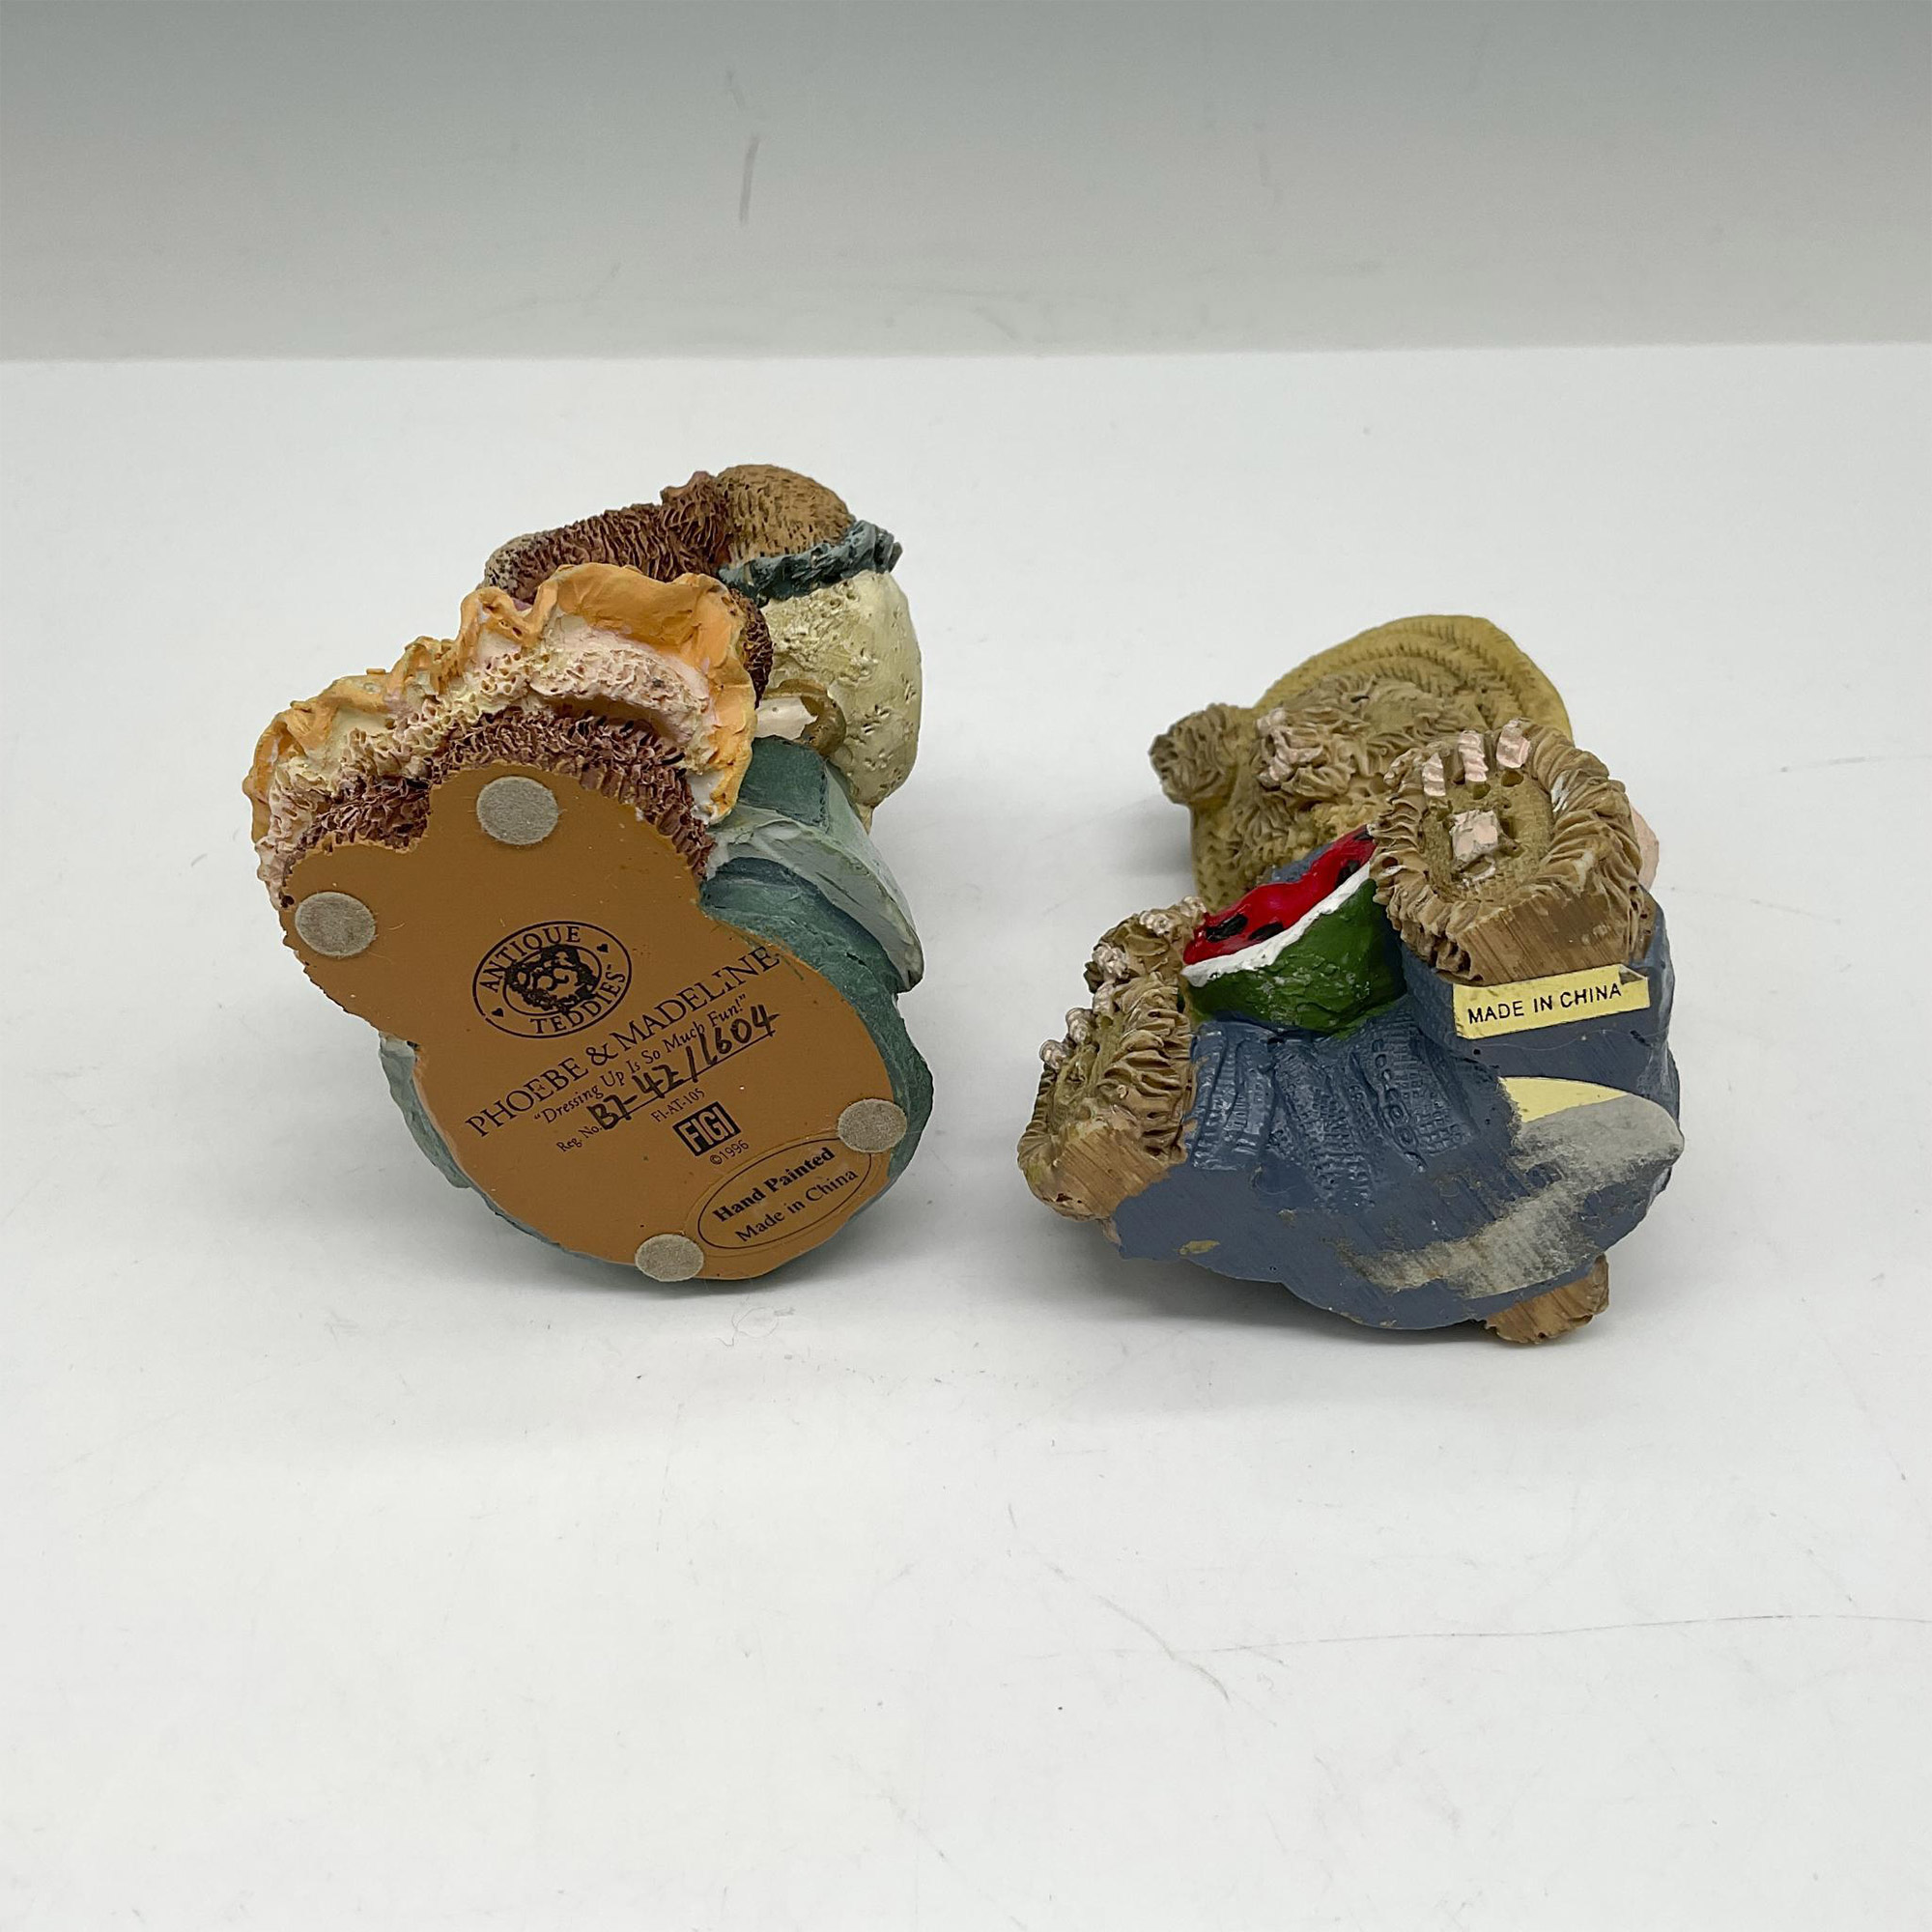 2pc Vintage Resin Bear Figurines by Antique Teddies - Image 3 of 3